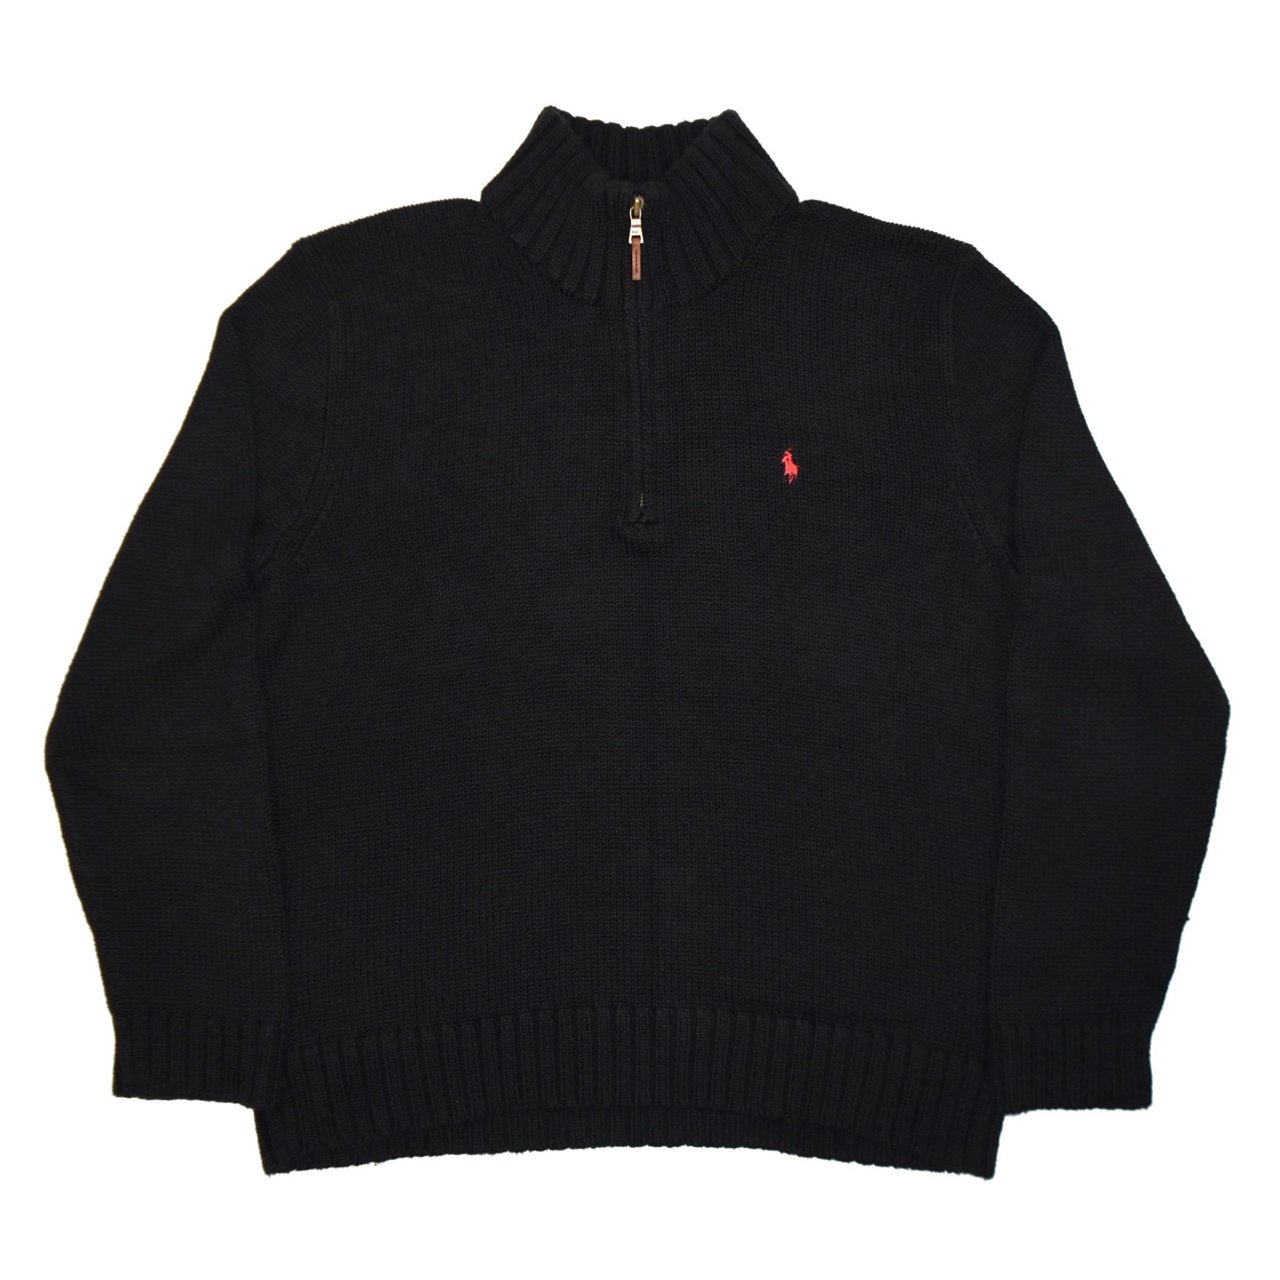 1990-2000s Polo Ralph Lauren Cotton knit pullover XL Black